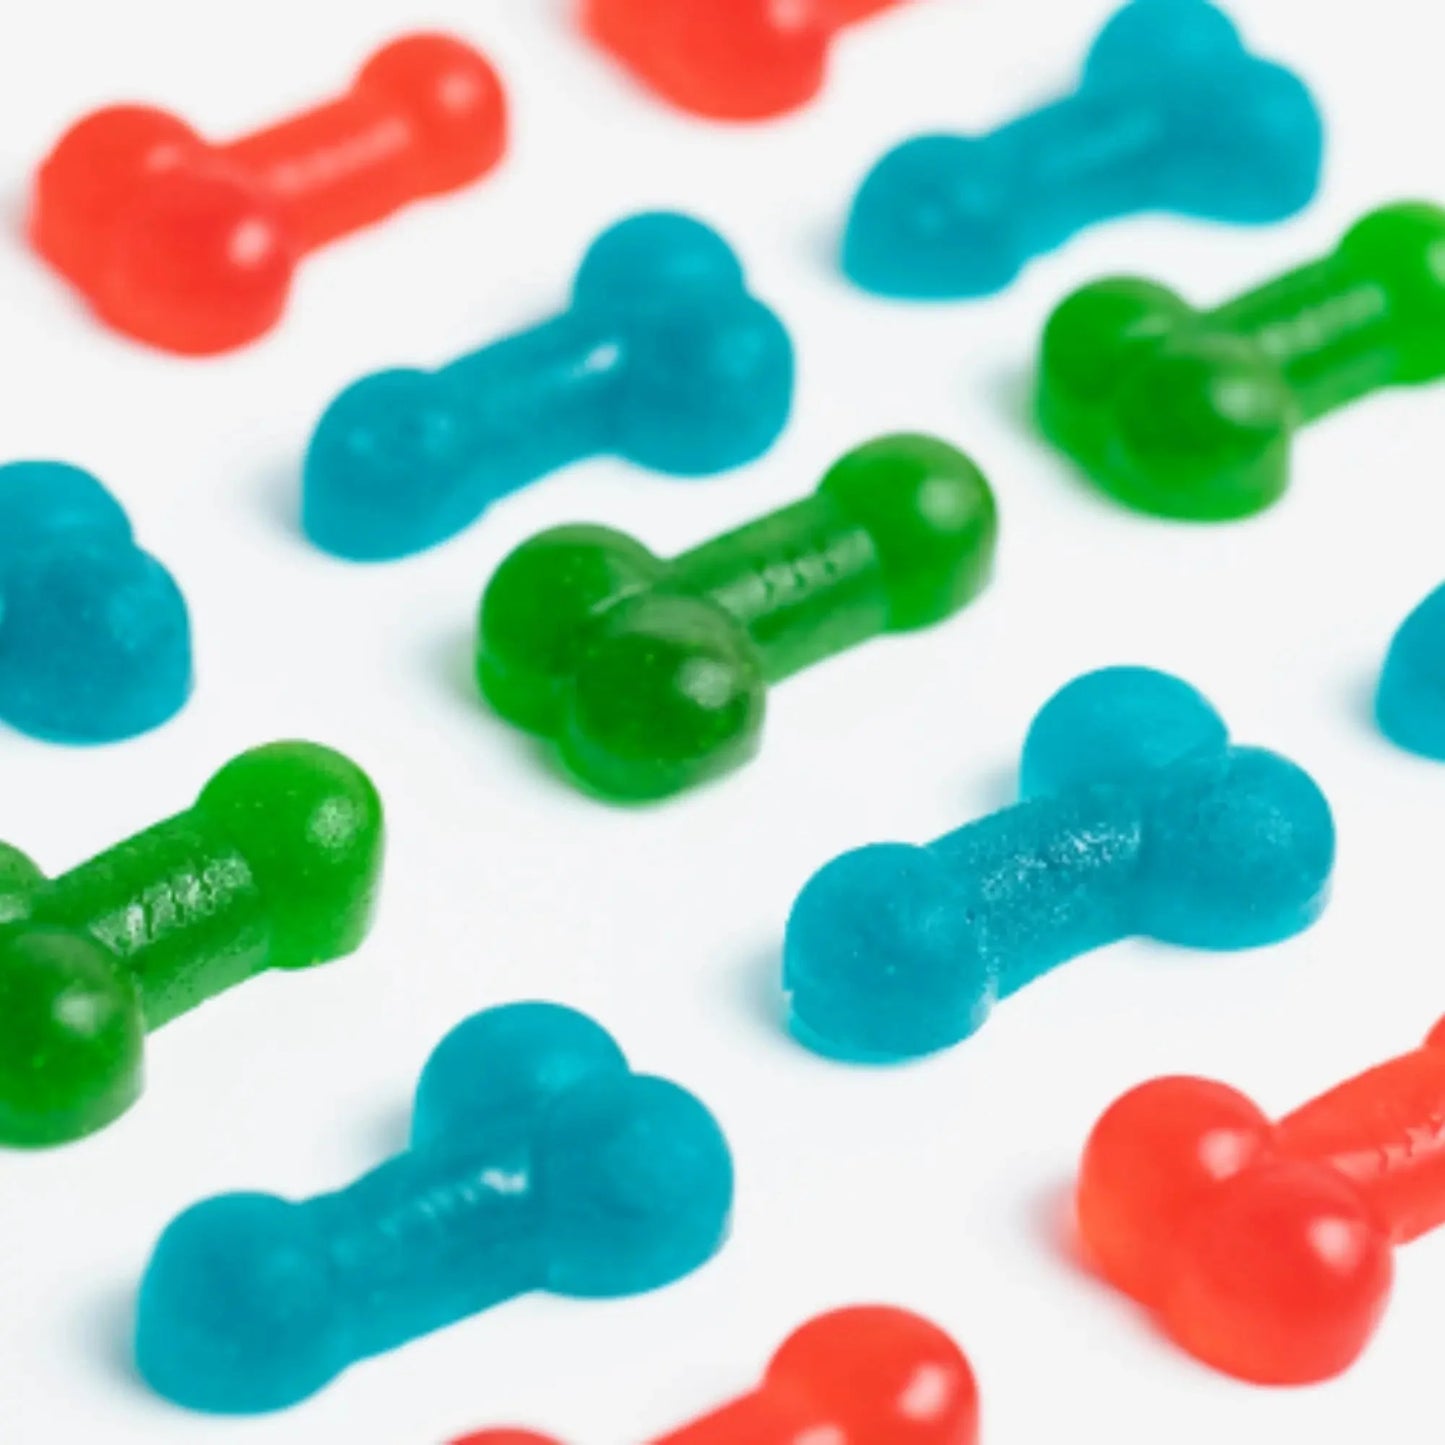 Bag of Dicks: Gummy Penis Candy